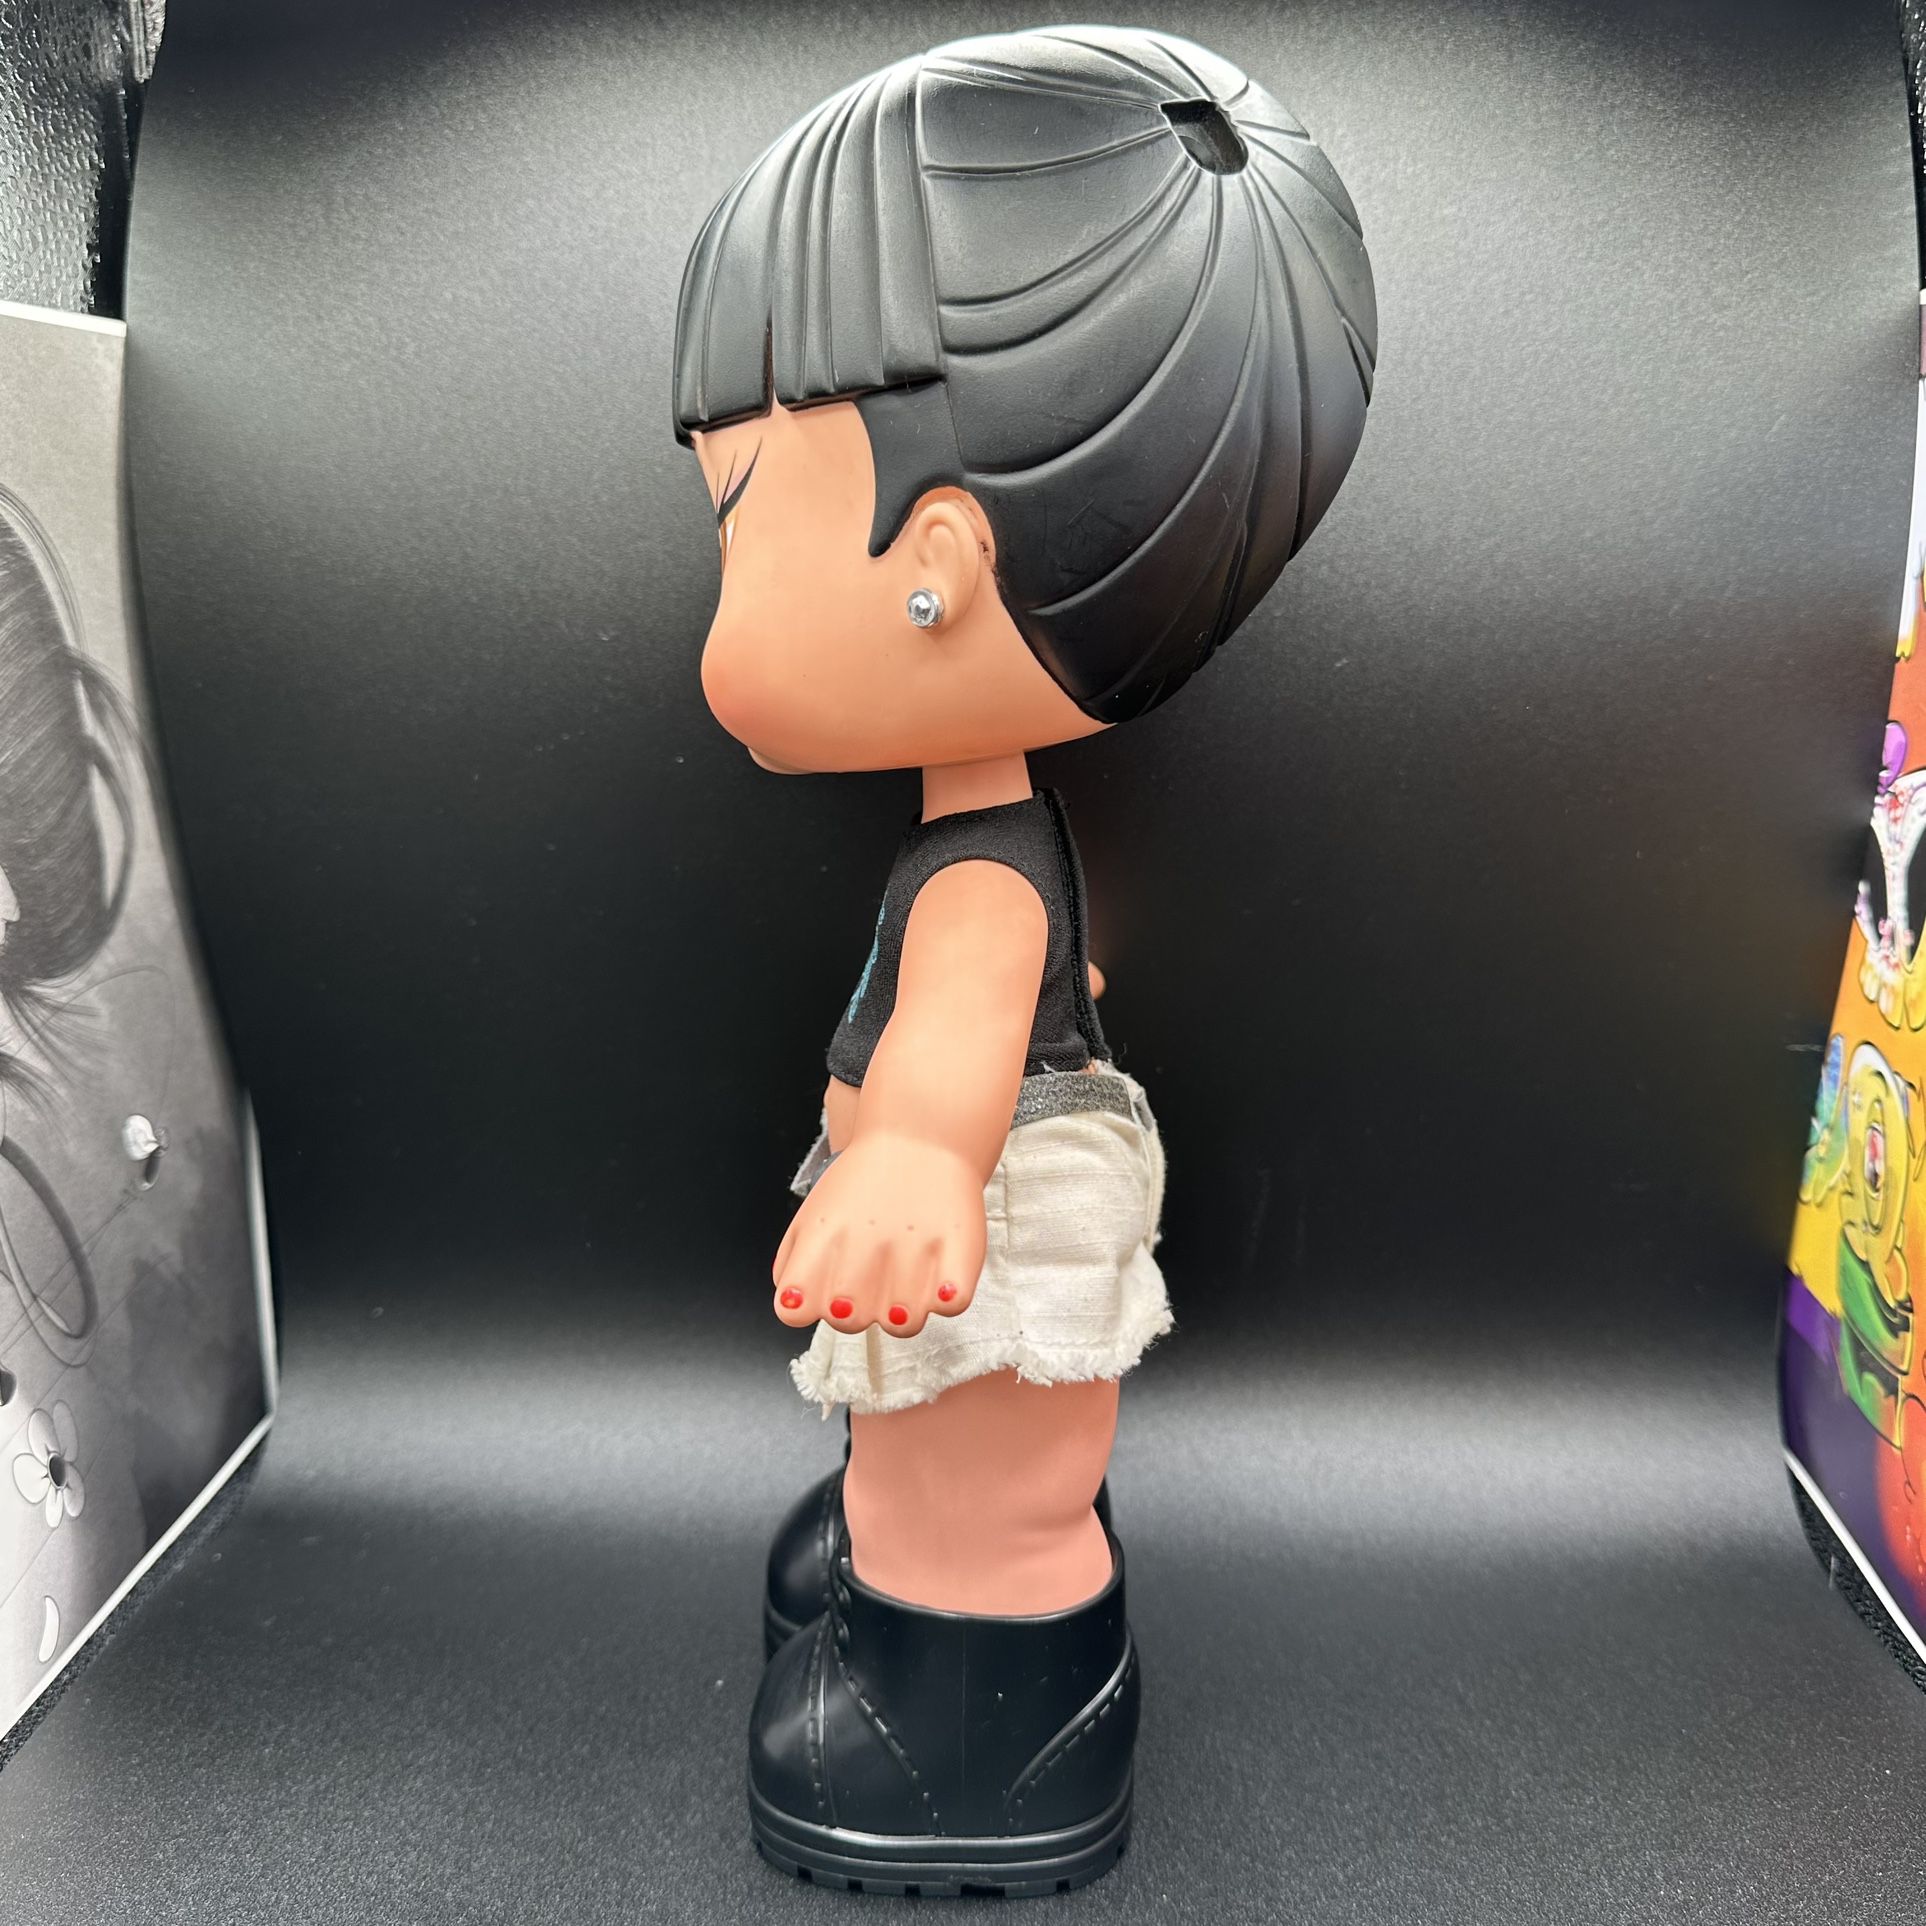 Big Bratz Babyz Jade MGA 12” Baby Toy Doll for Sale in Claremont